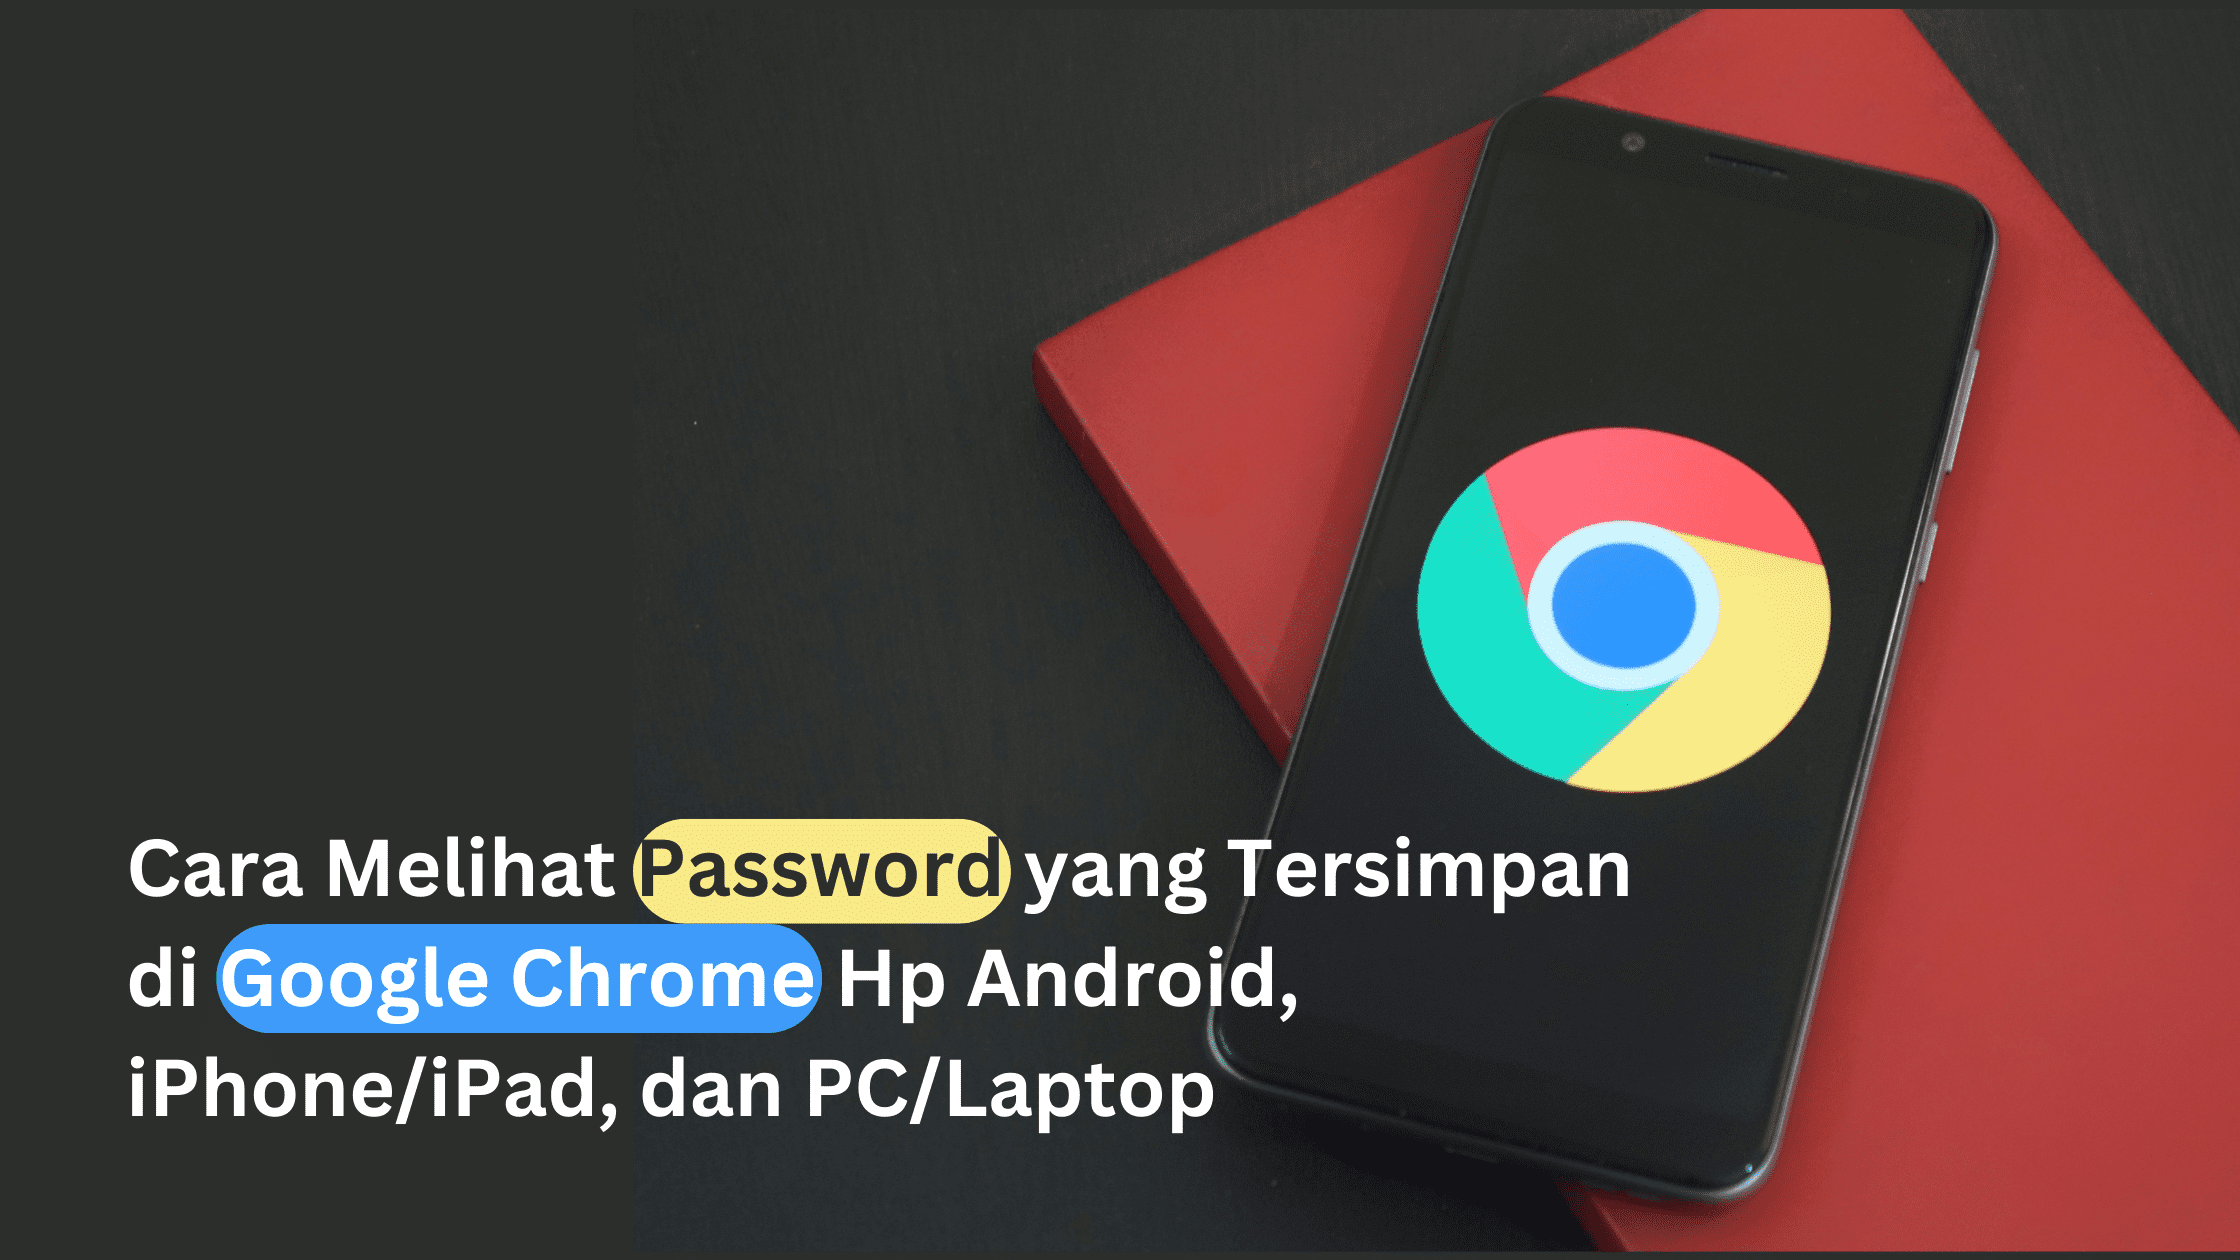 Cara Melihat Password yang Tersimpan di Google Chrome Hp Android, iPhone/iPad, dan PC/Laptop